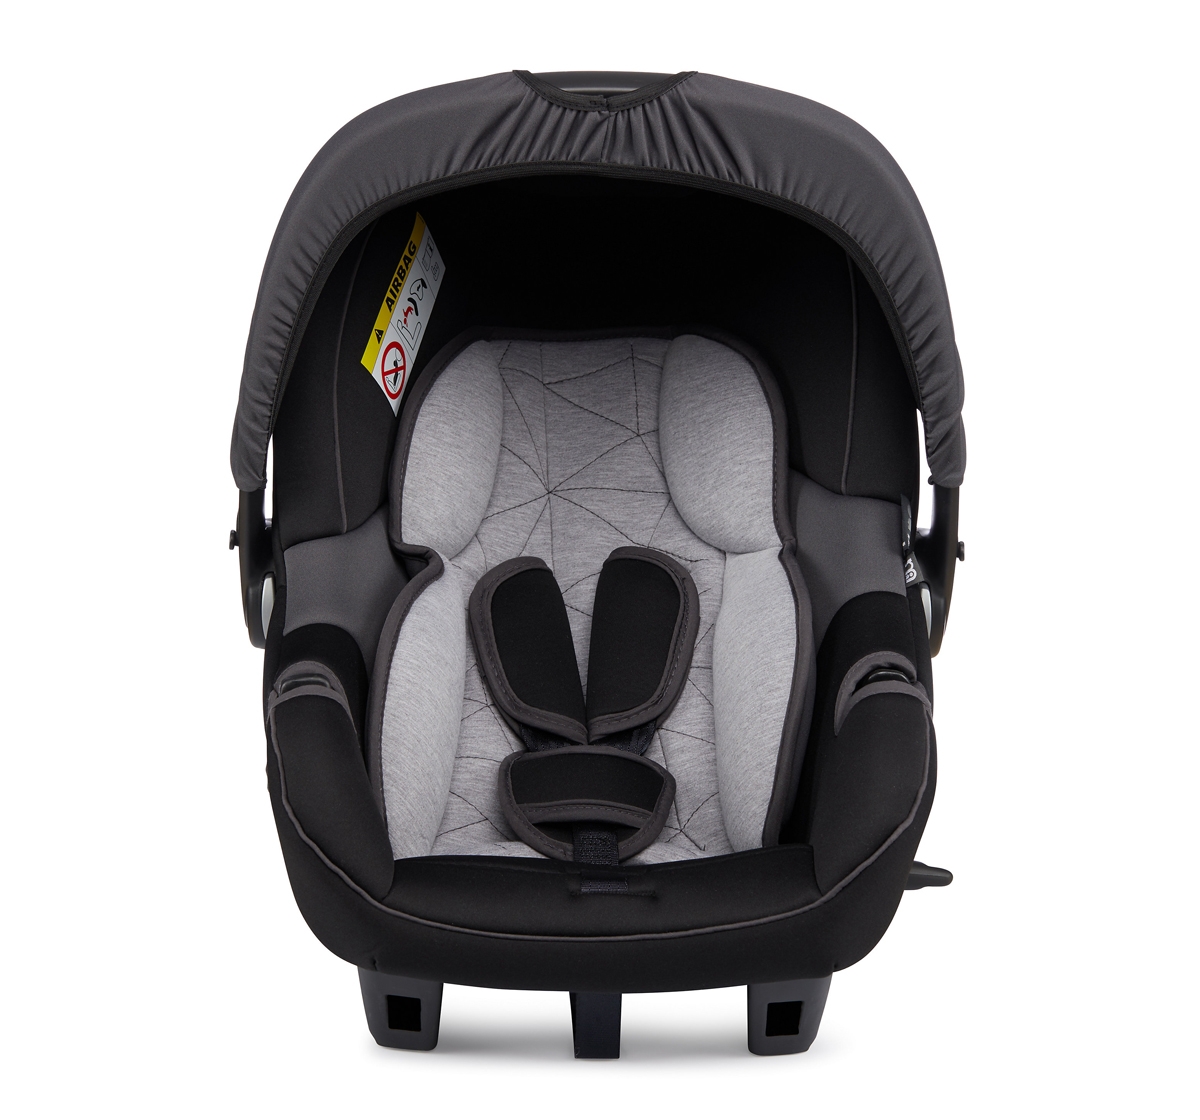 Mothercare Car Seat Ziba Black And Grey Multicolor